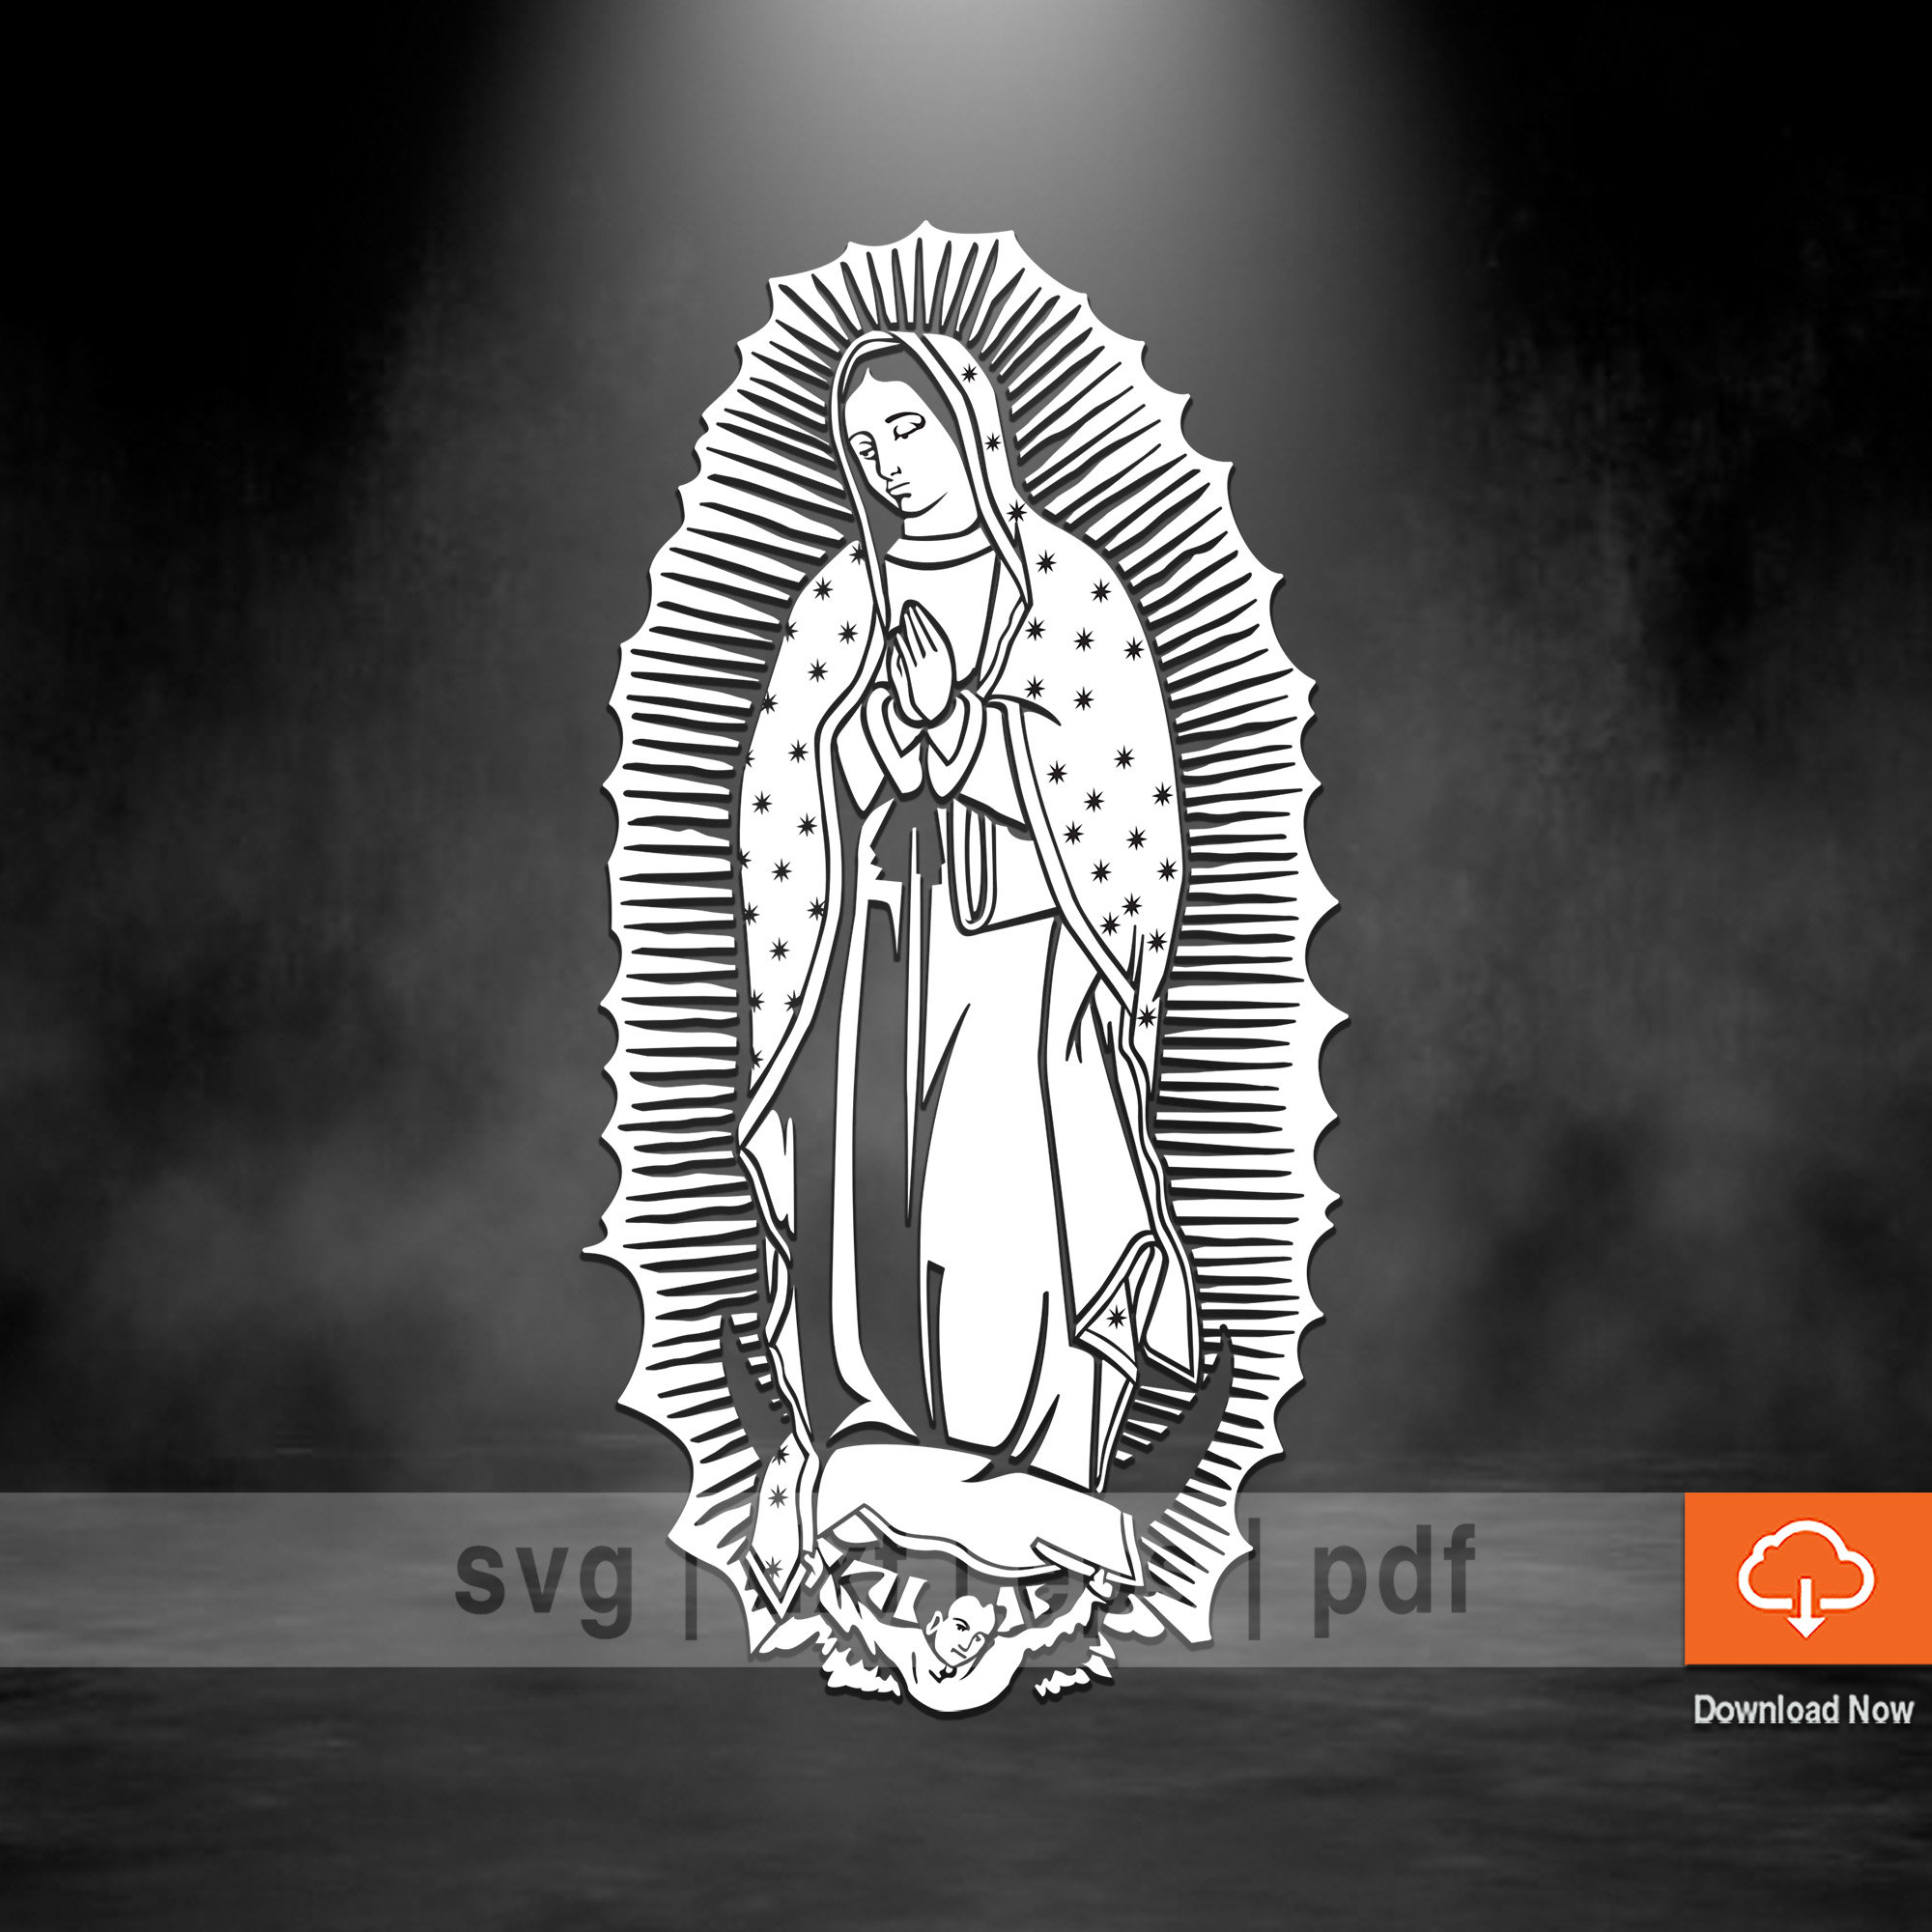 Virgen de guadalupe svg virgin mary digital file diy painting cricut silhouette download now